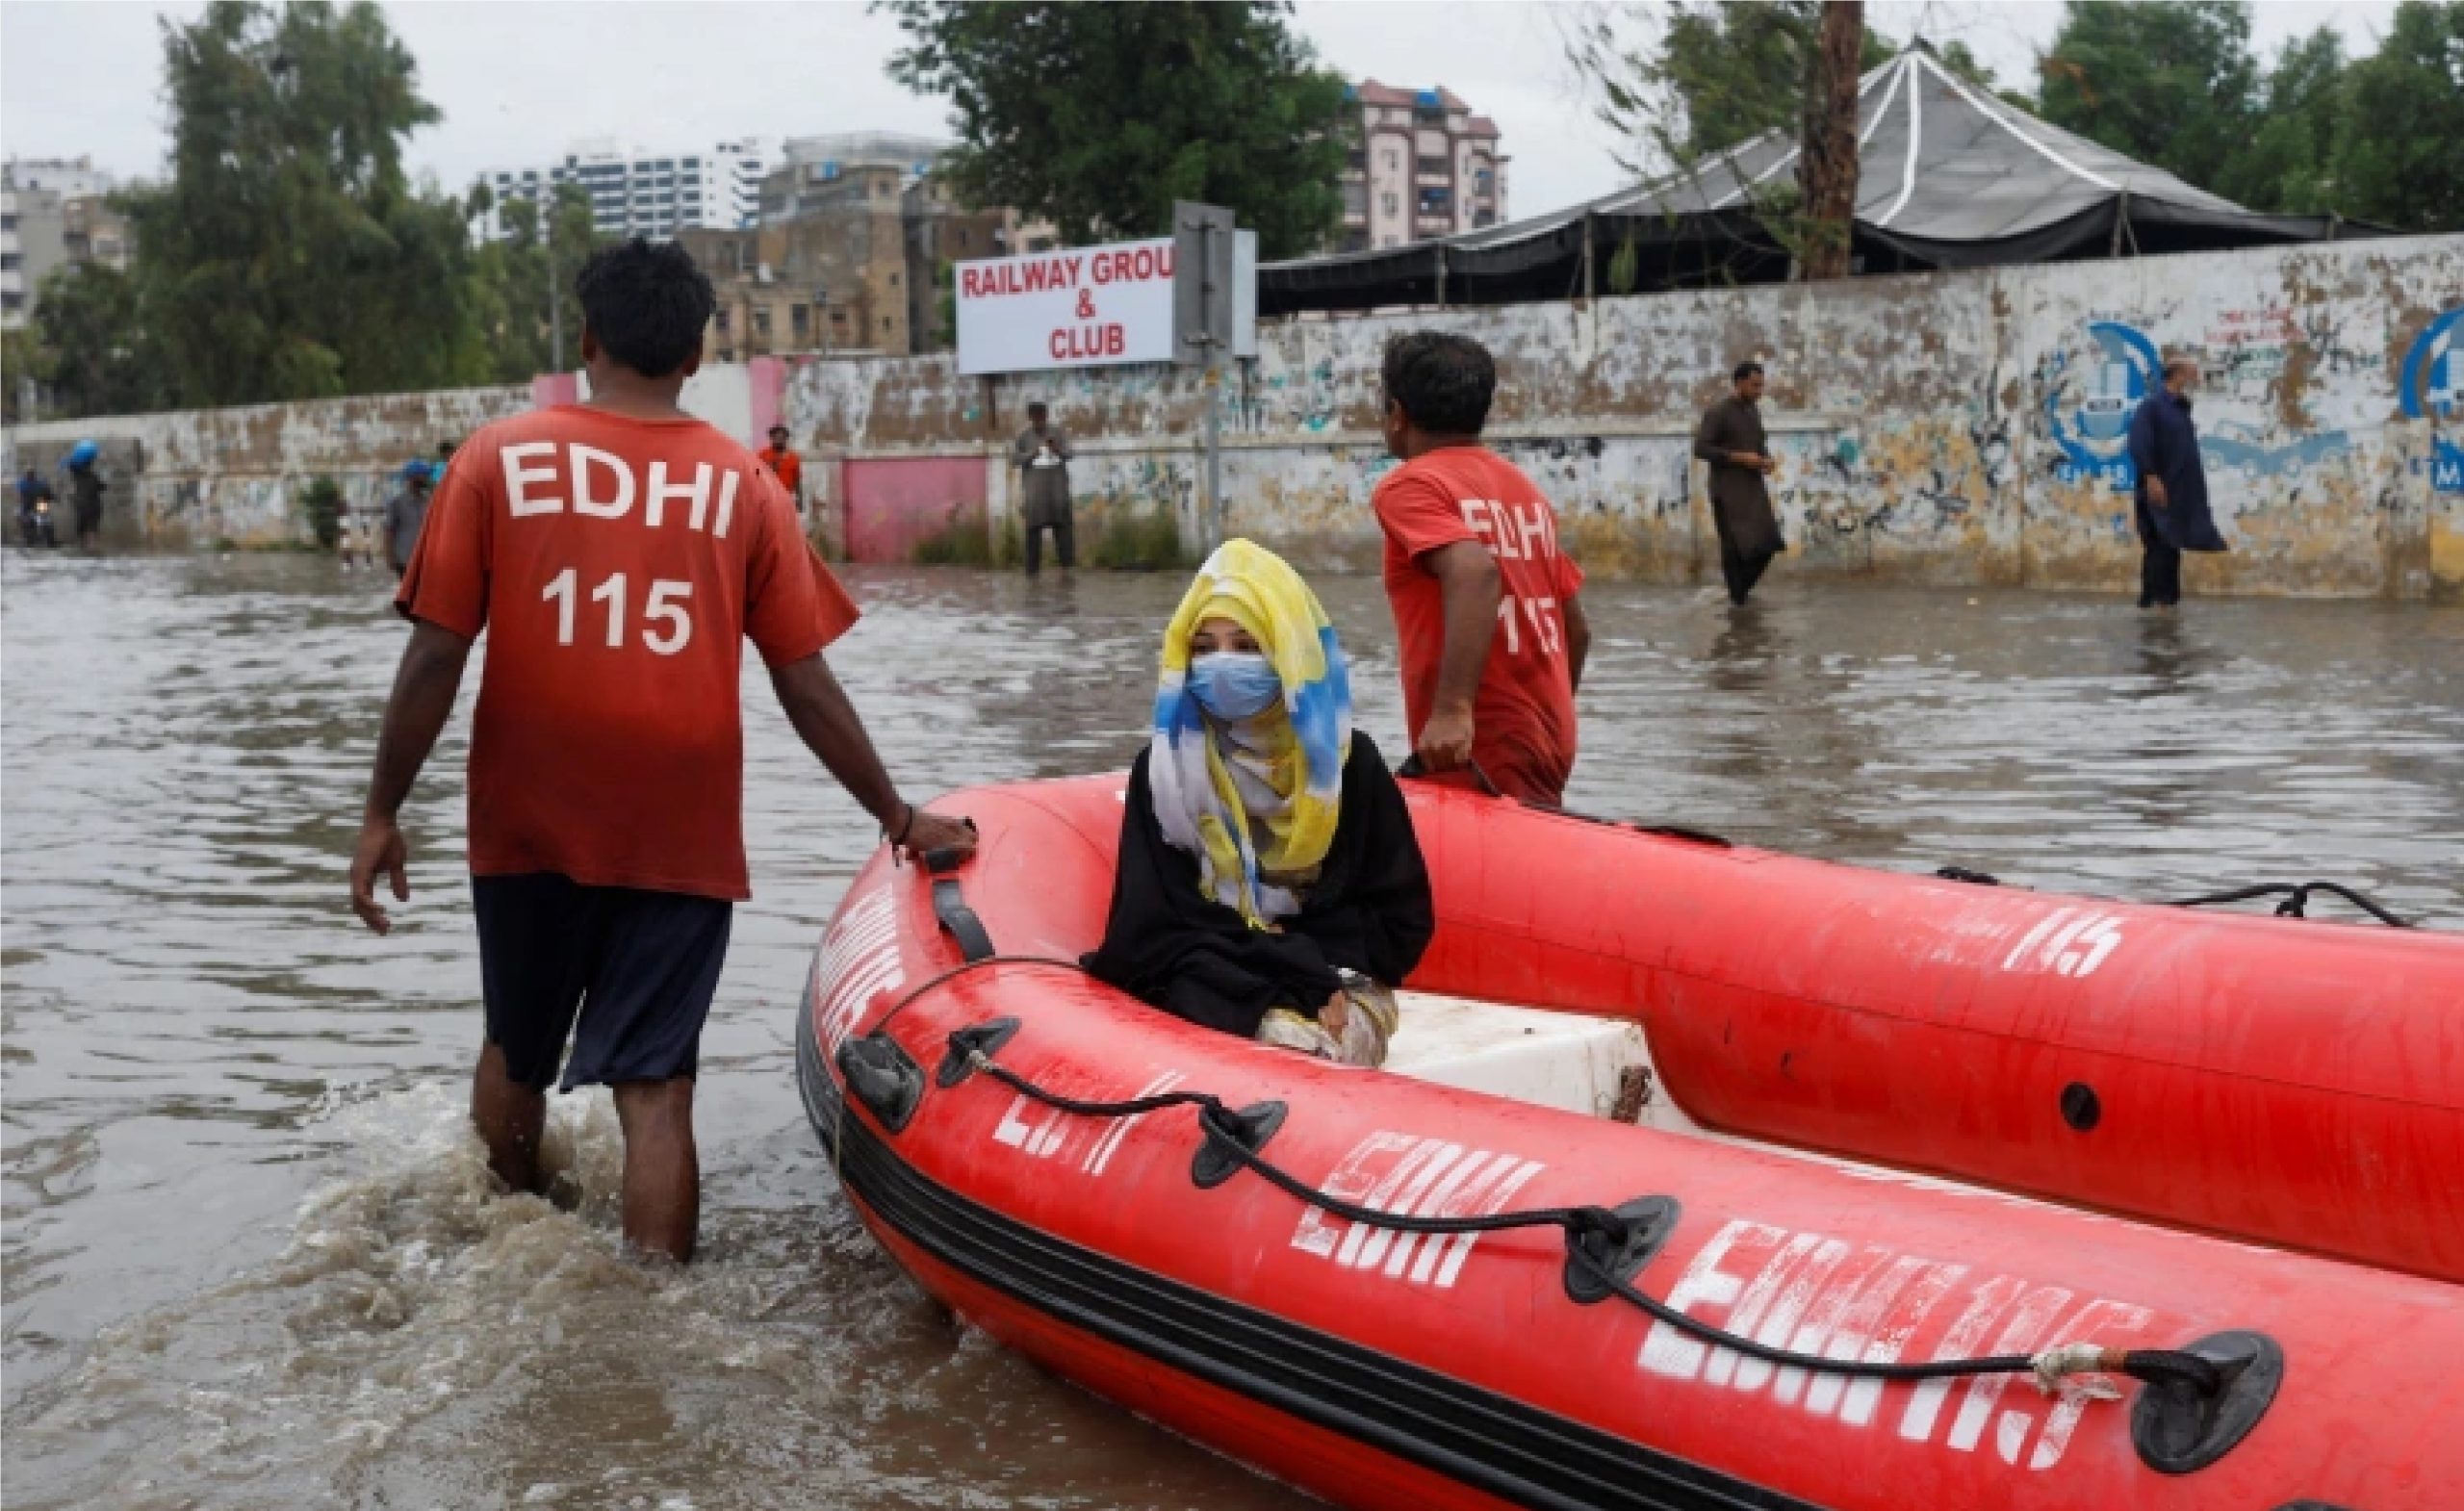 Flooding in Pakistan kills dozens as monsoon rains lash country